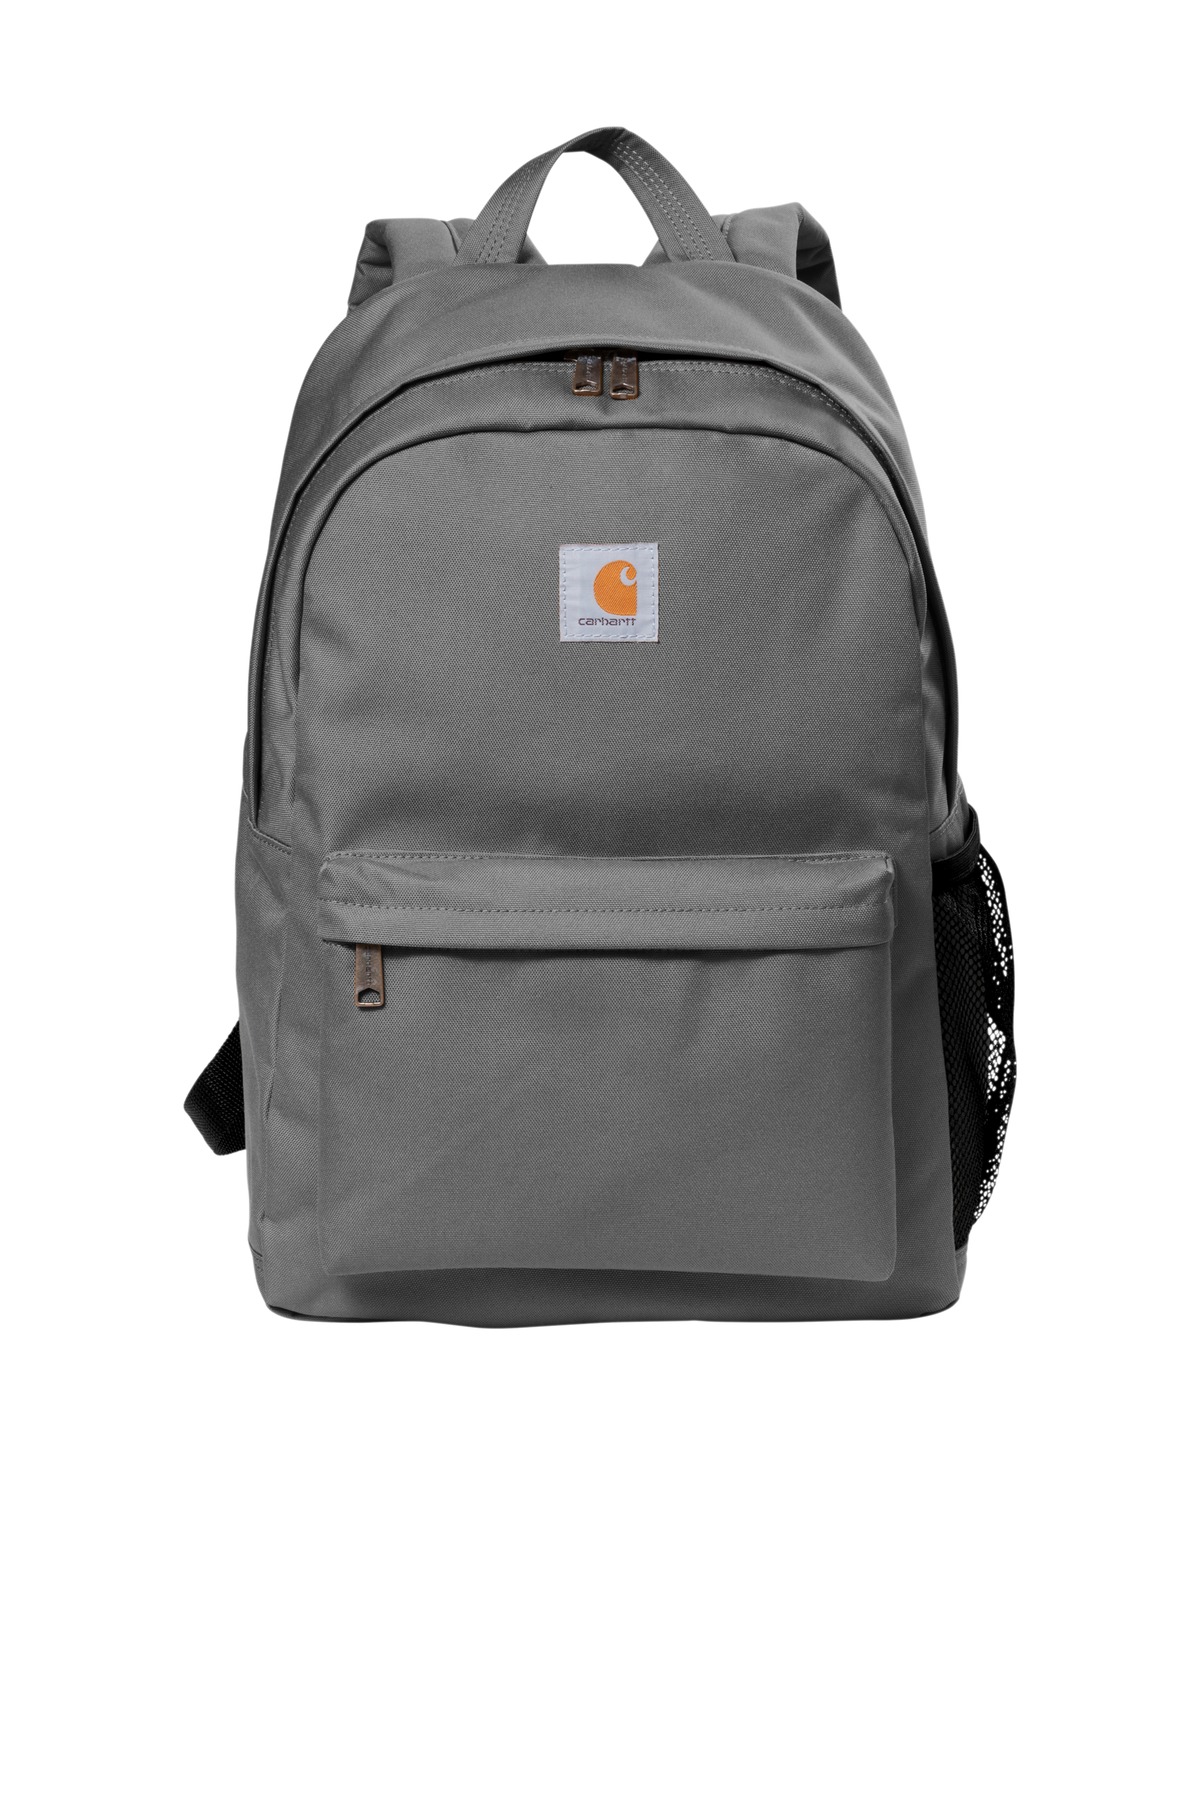 Carhartt Canvas Backpack-Carhartt